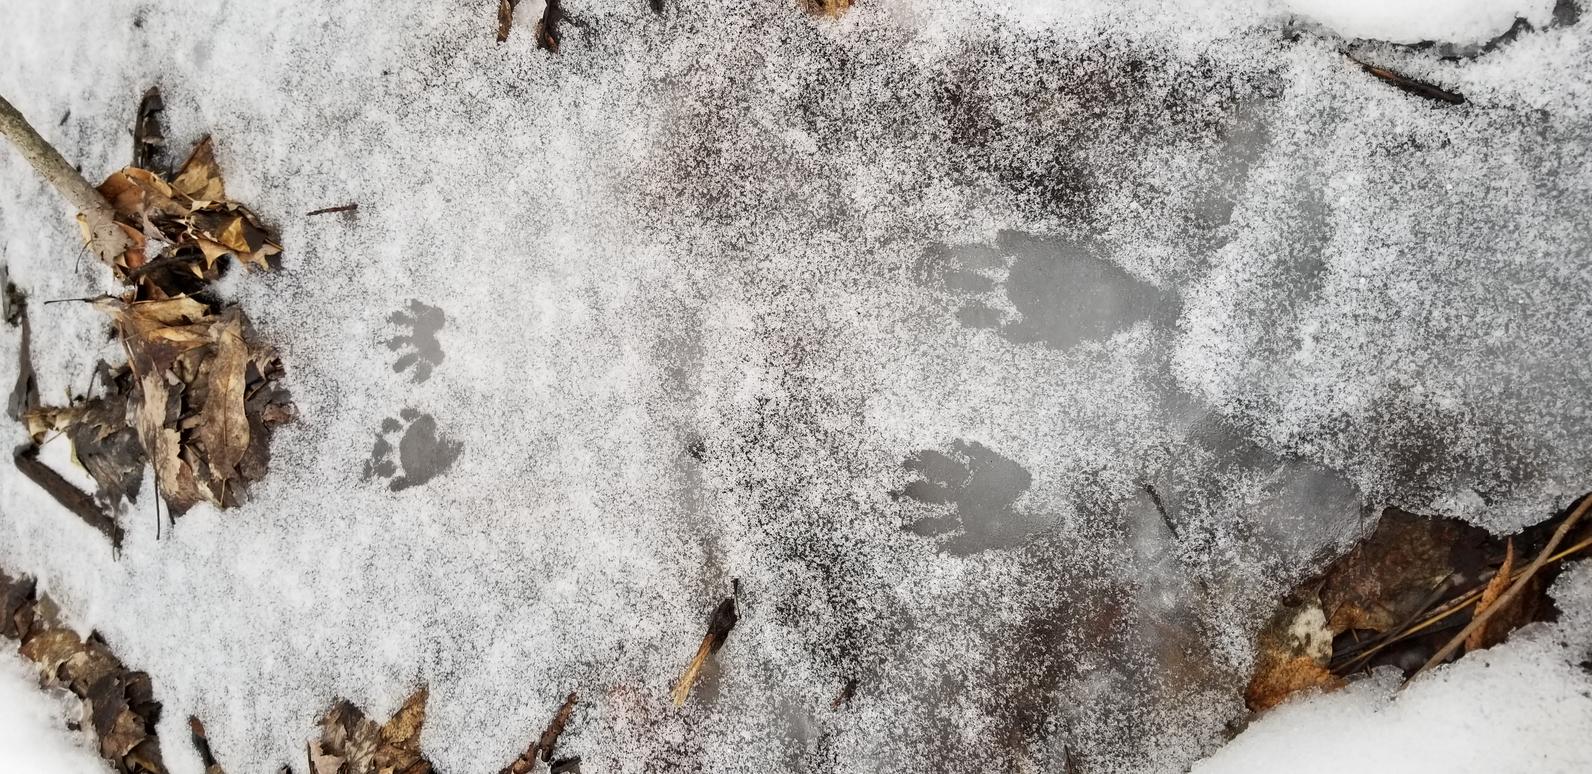 Racoon Tracks in dusting of snow